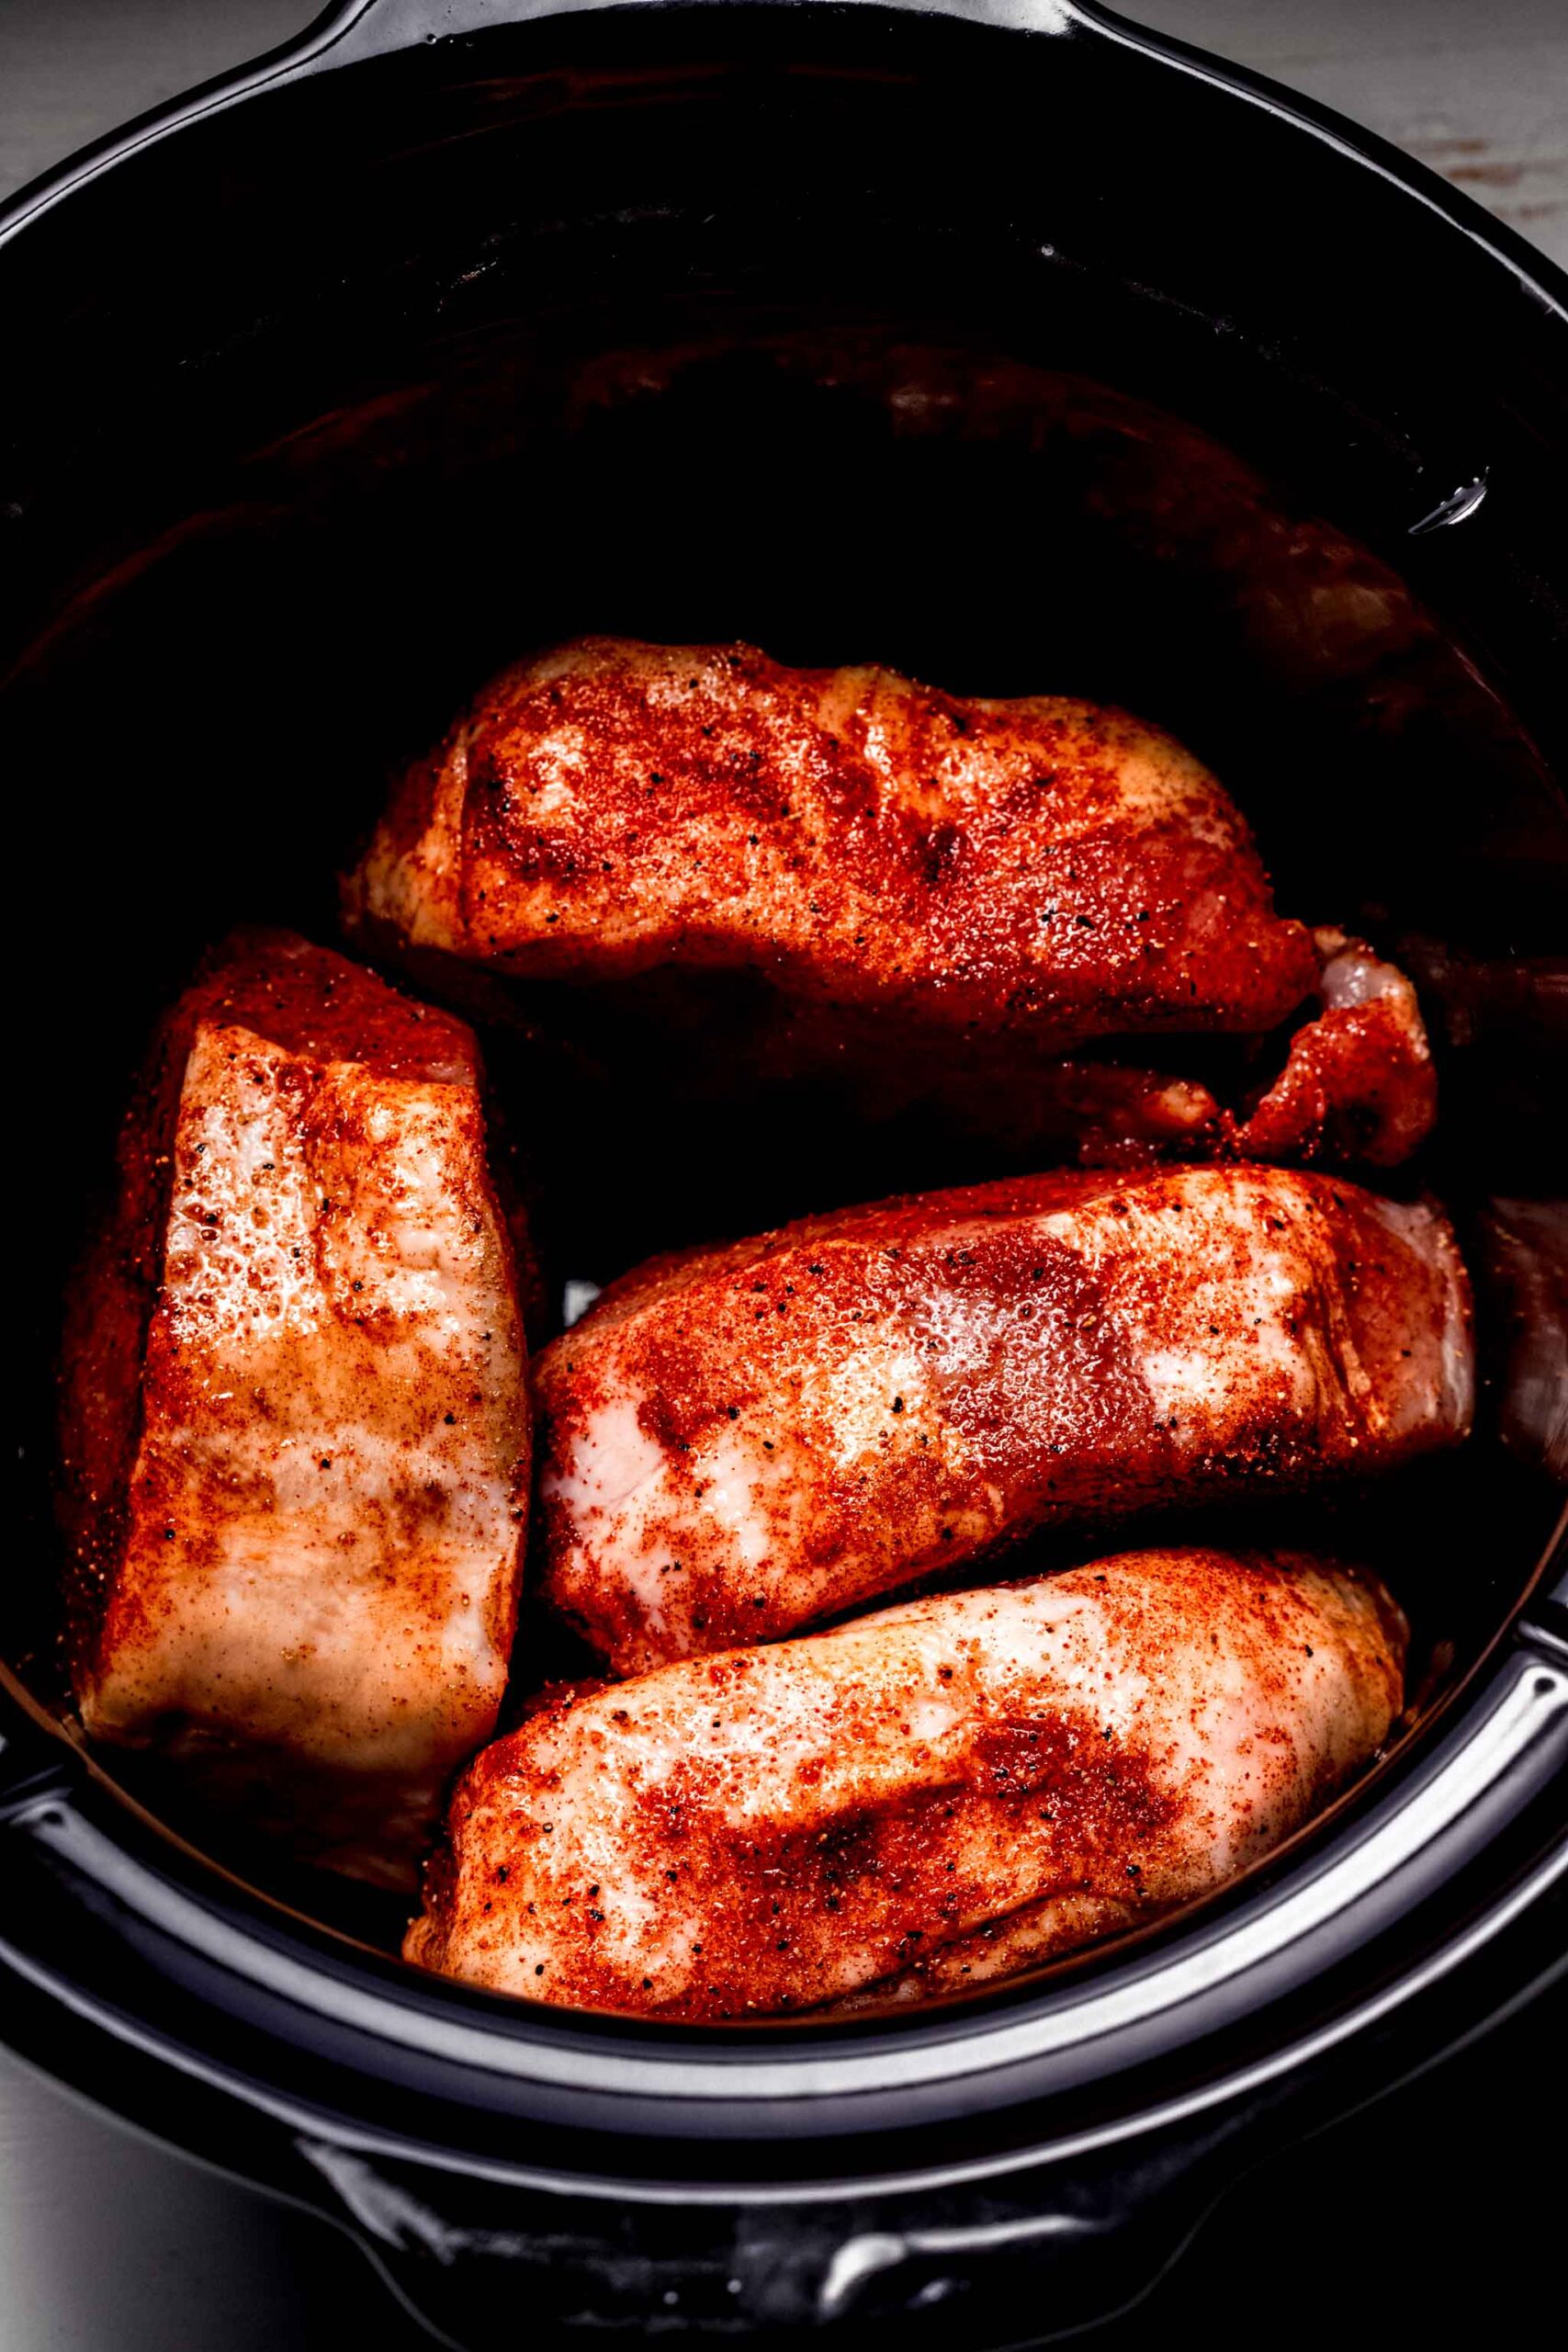 Uncooked pork chops in slow cooker.